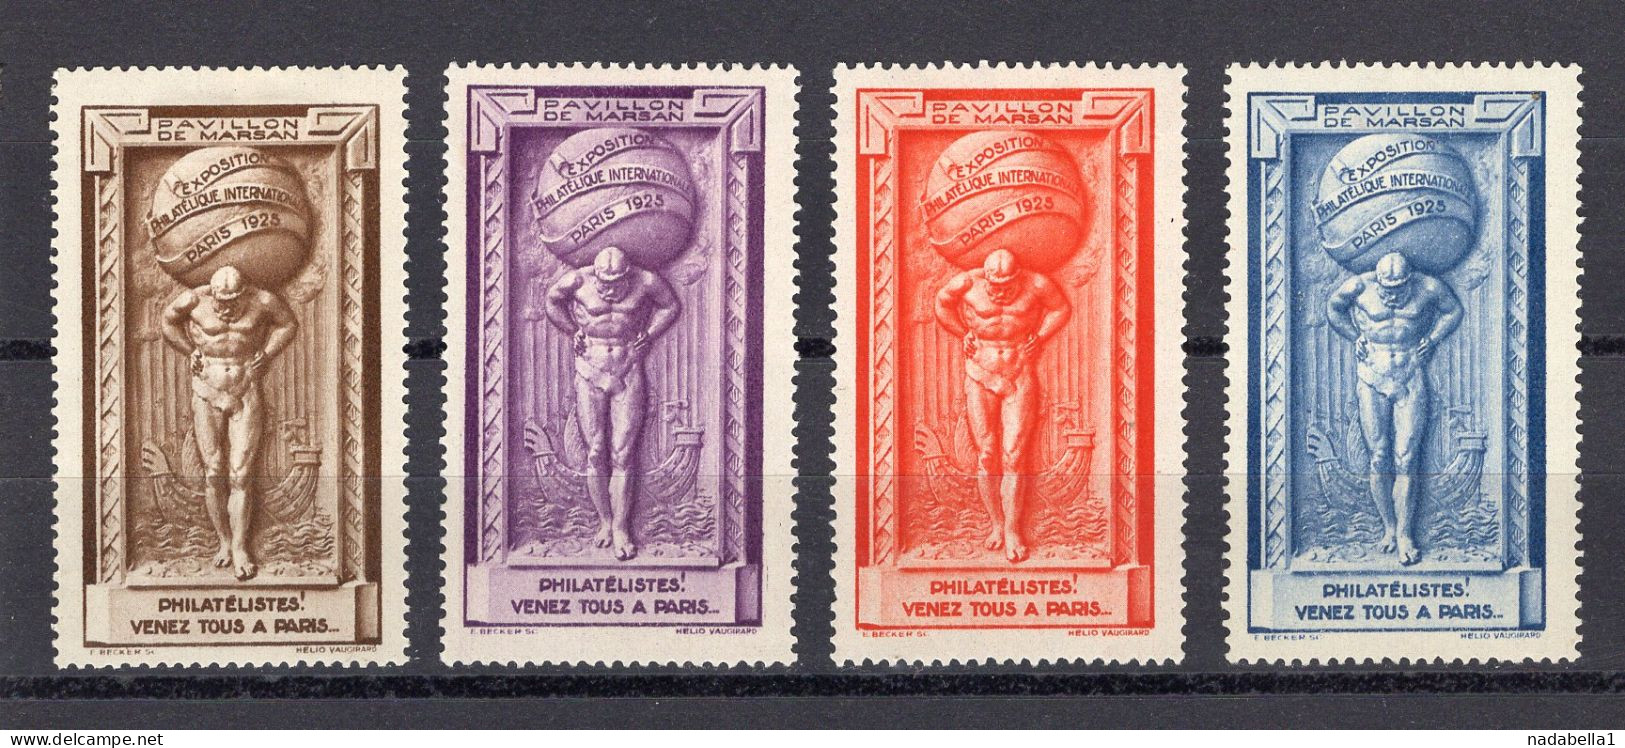 1925. PARIS STAMP EXHIBITION,FRANCE,POSTER STAMPS,CINDERELLAS,SET OF 4,MH - Erinnophilie